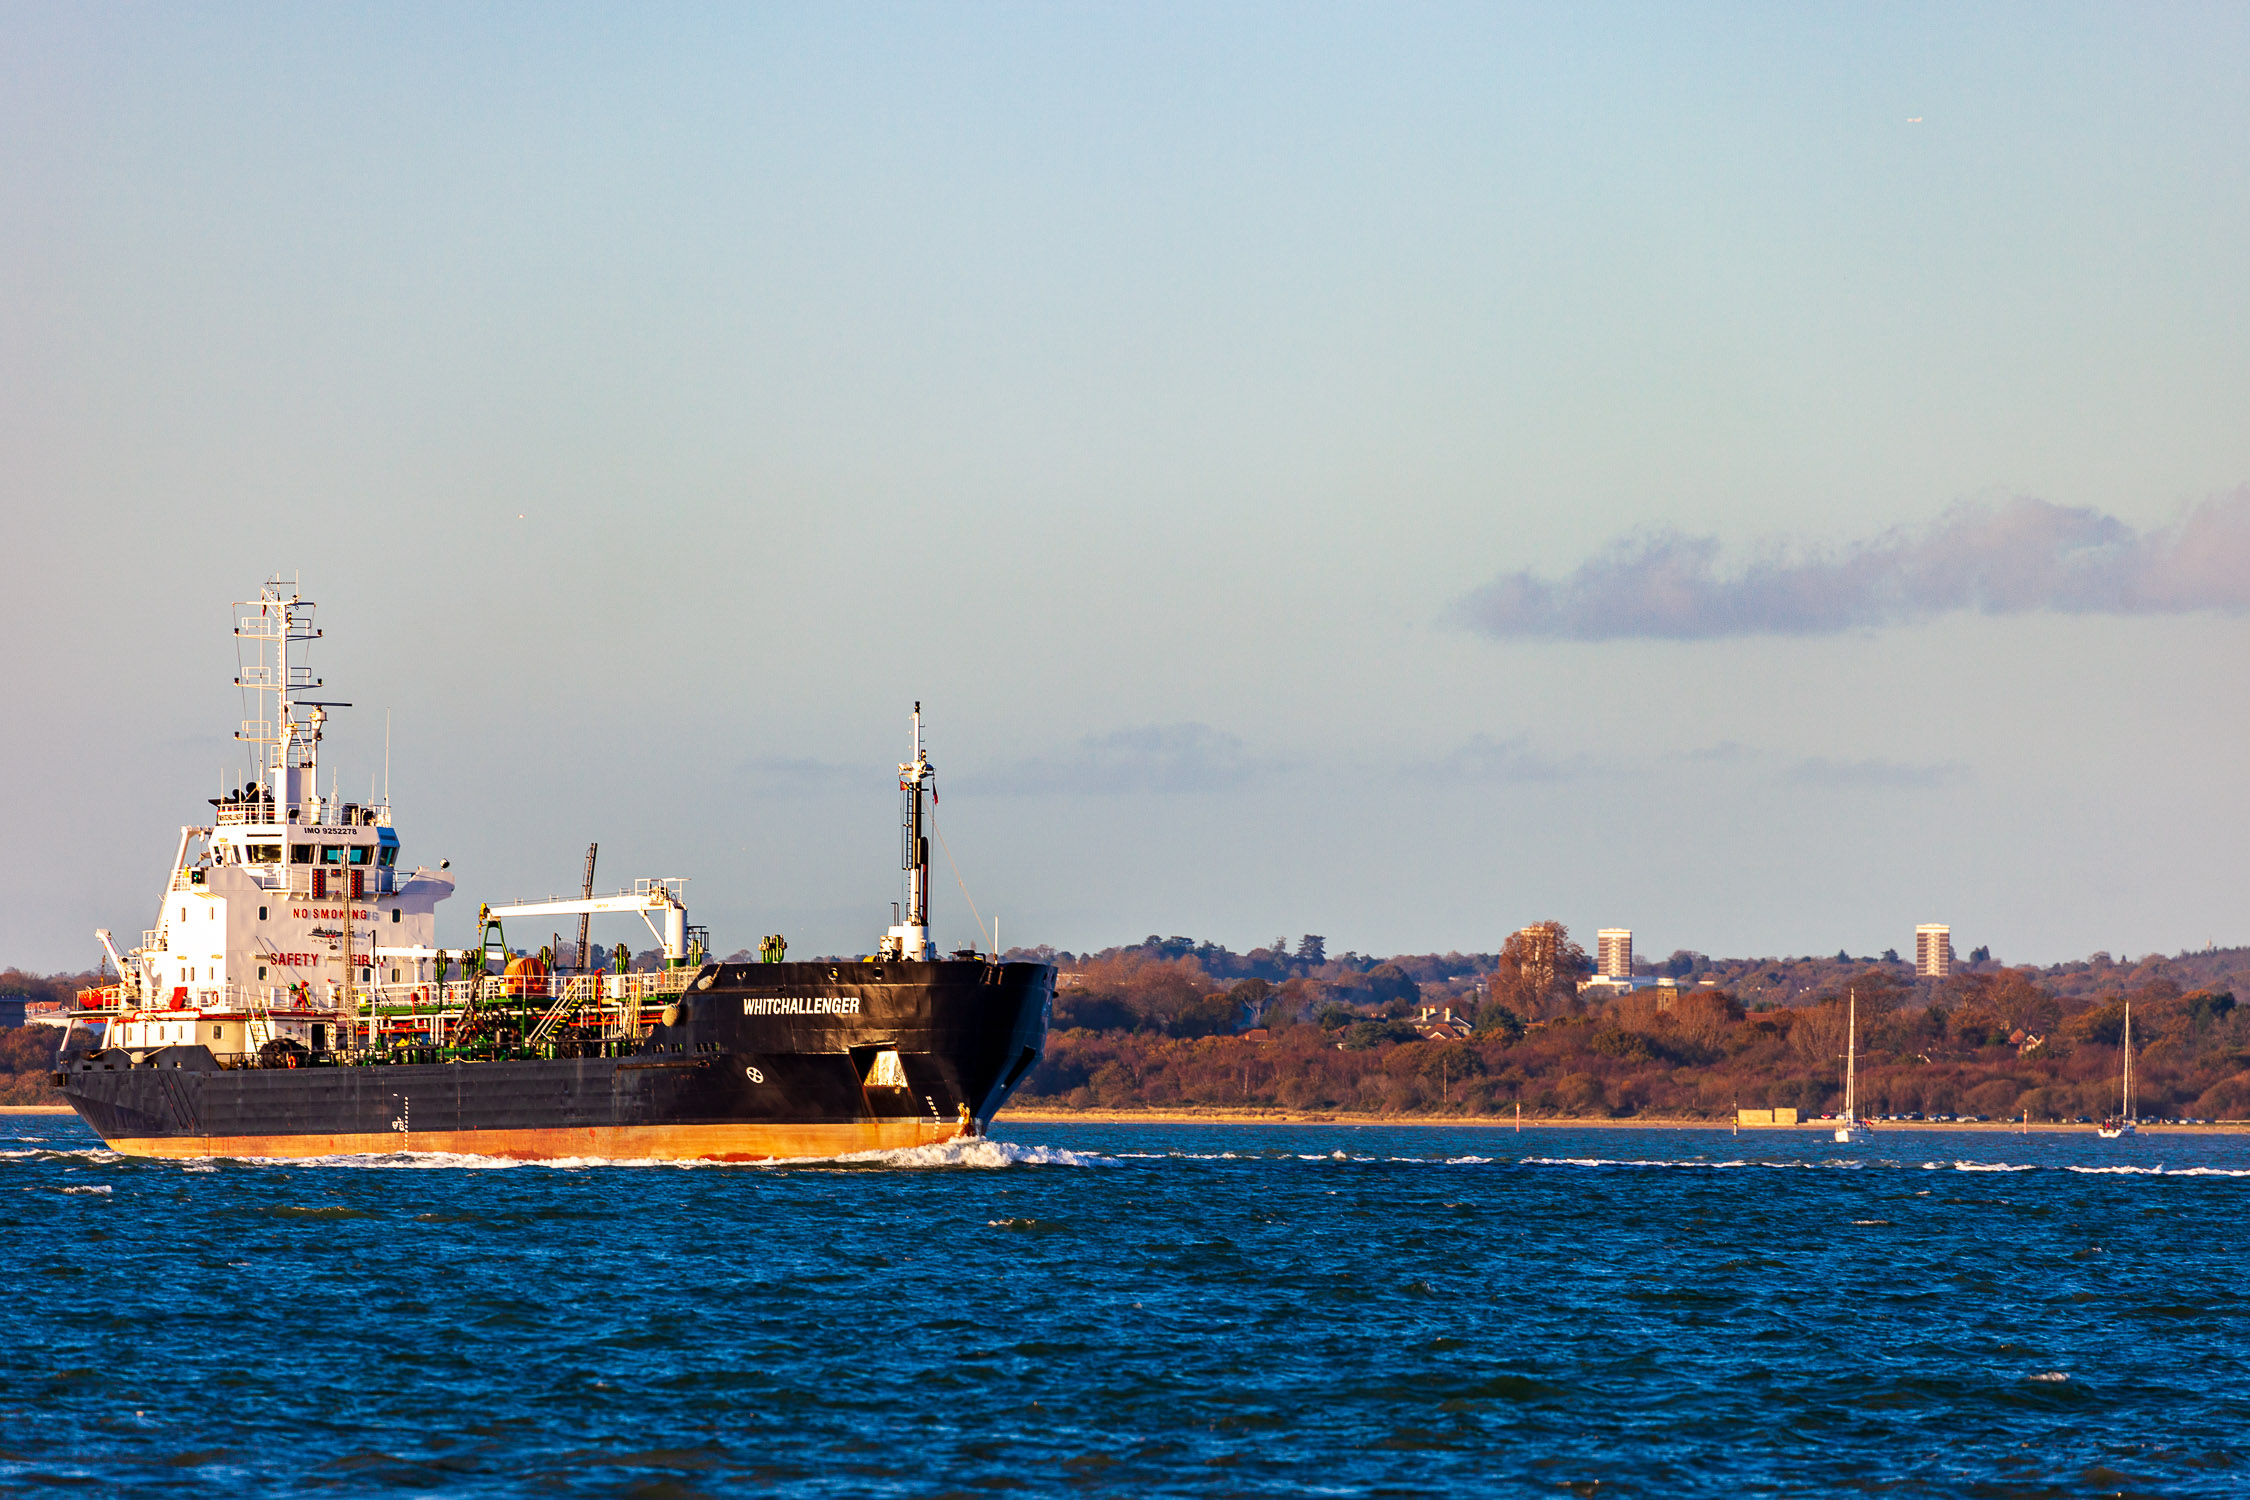 Ships on Southampton Water